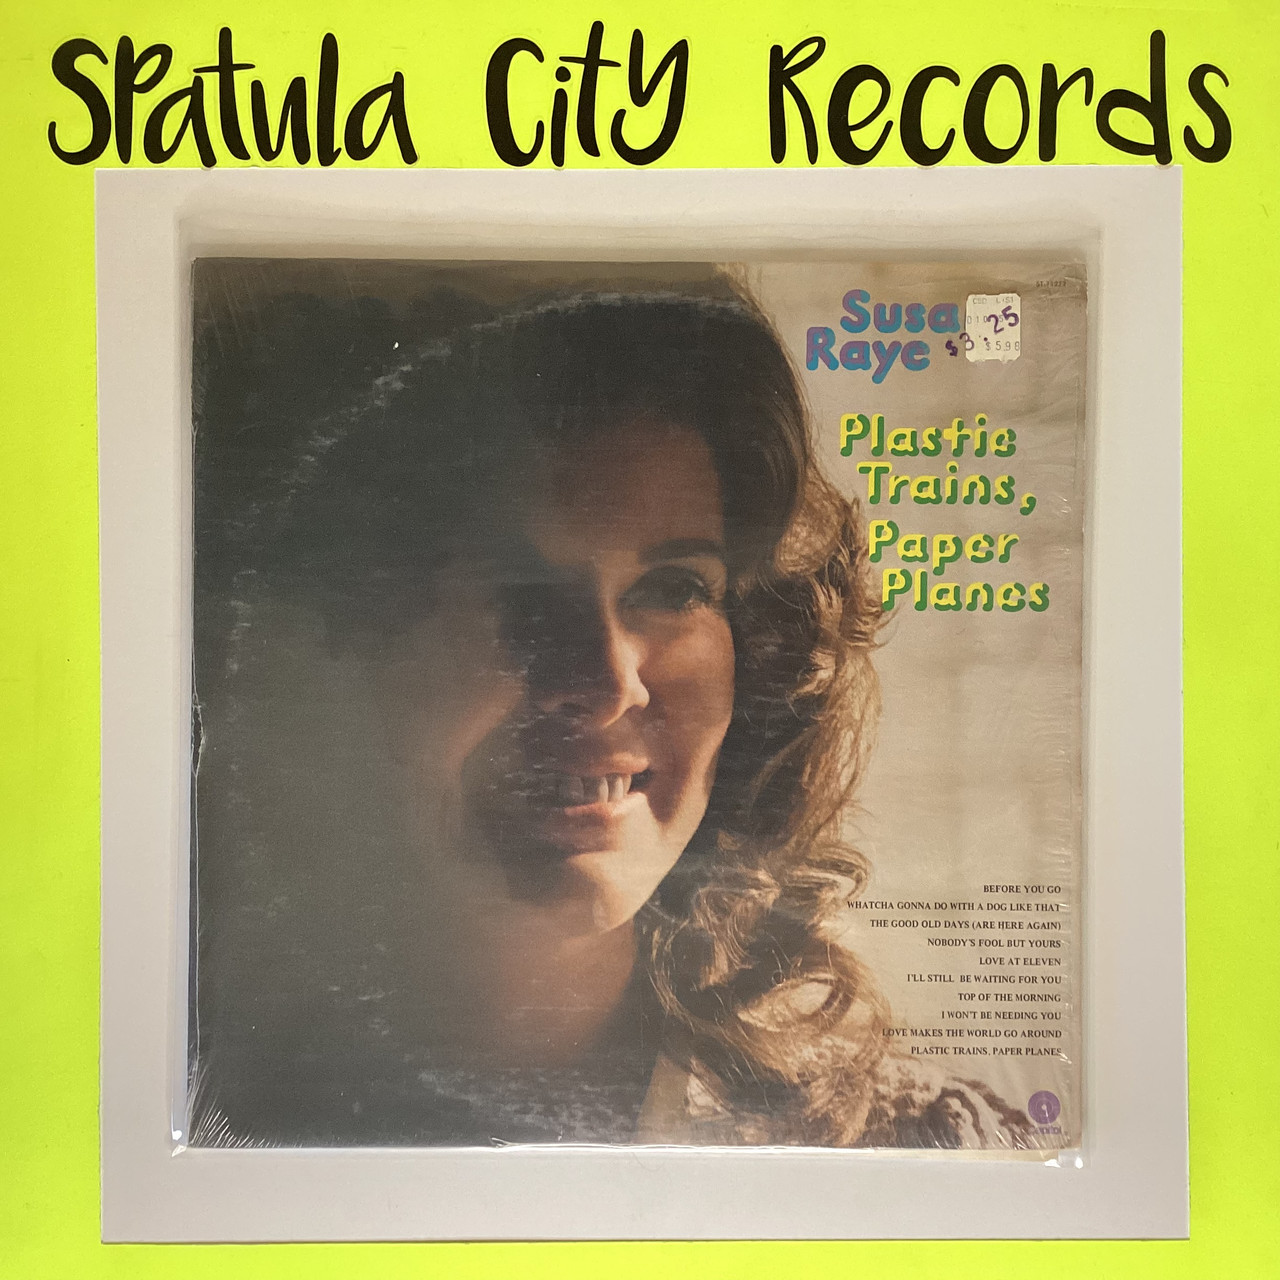 Susan Raye - Plastic Trains, Paper Planes - vinyl record album LP